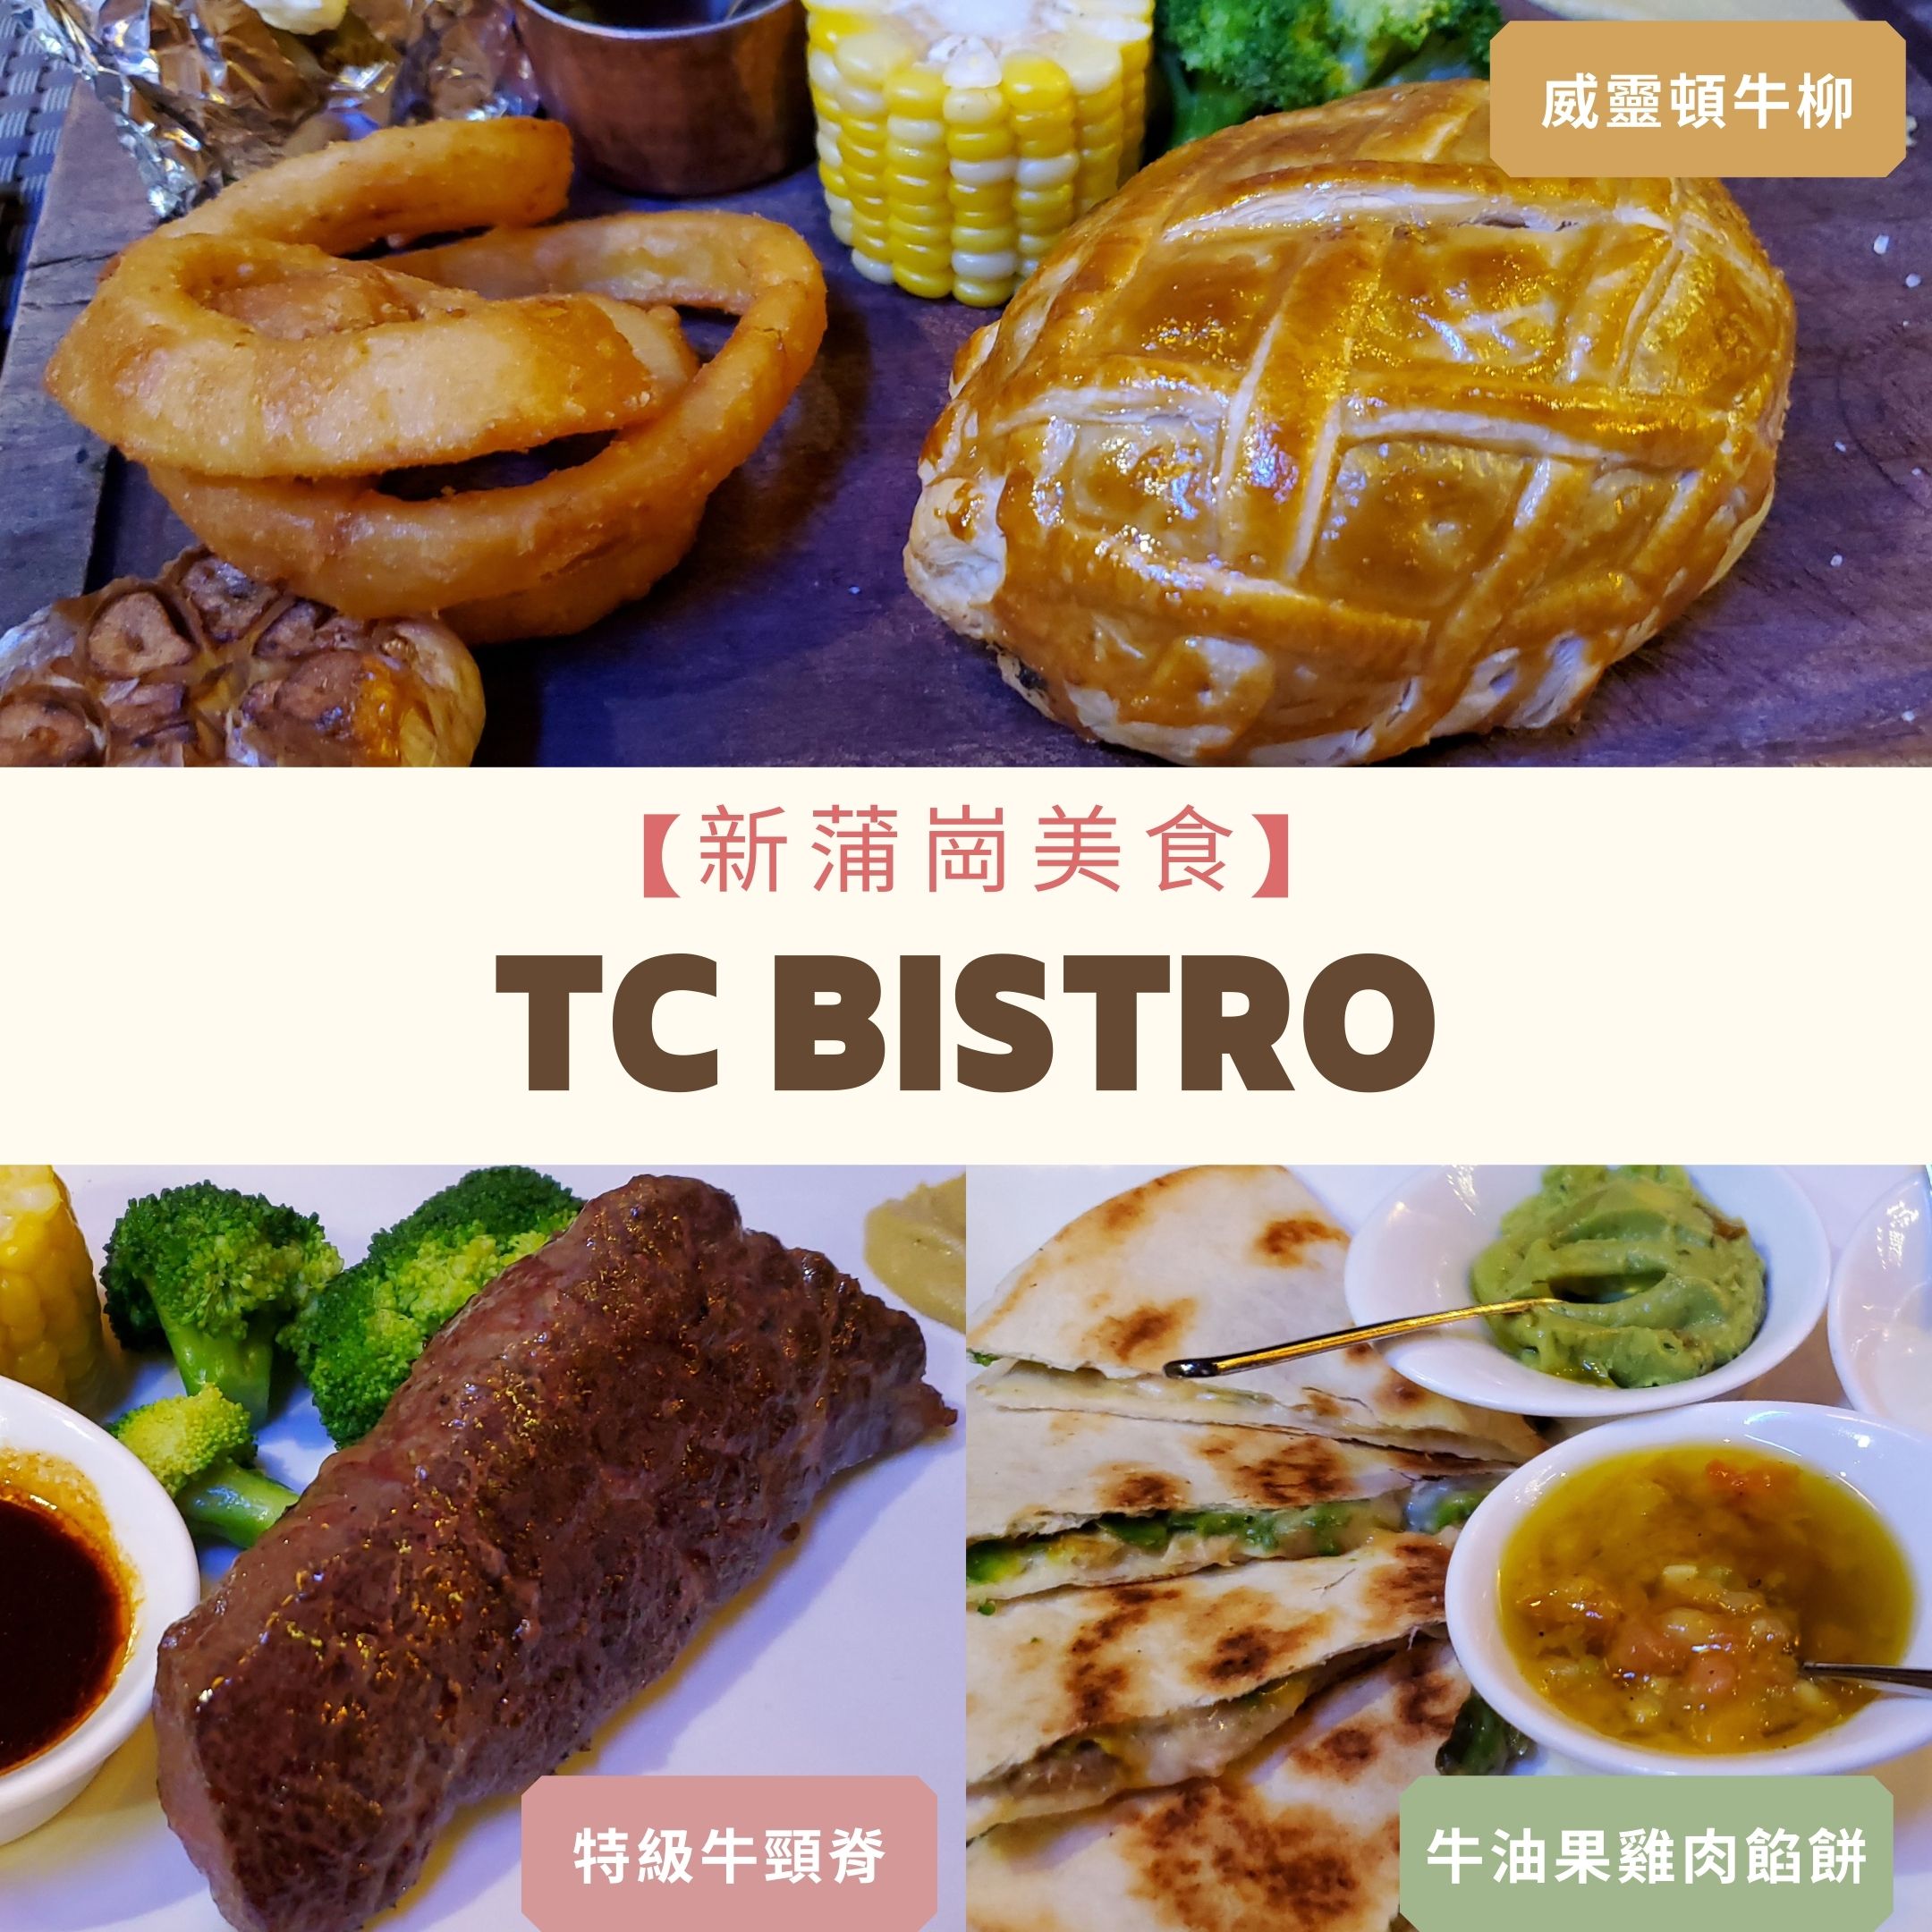 Blog-新蒲崗美食-TC-BISTRO